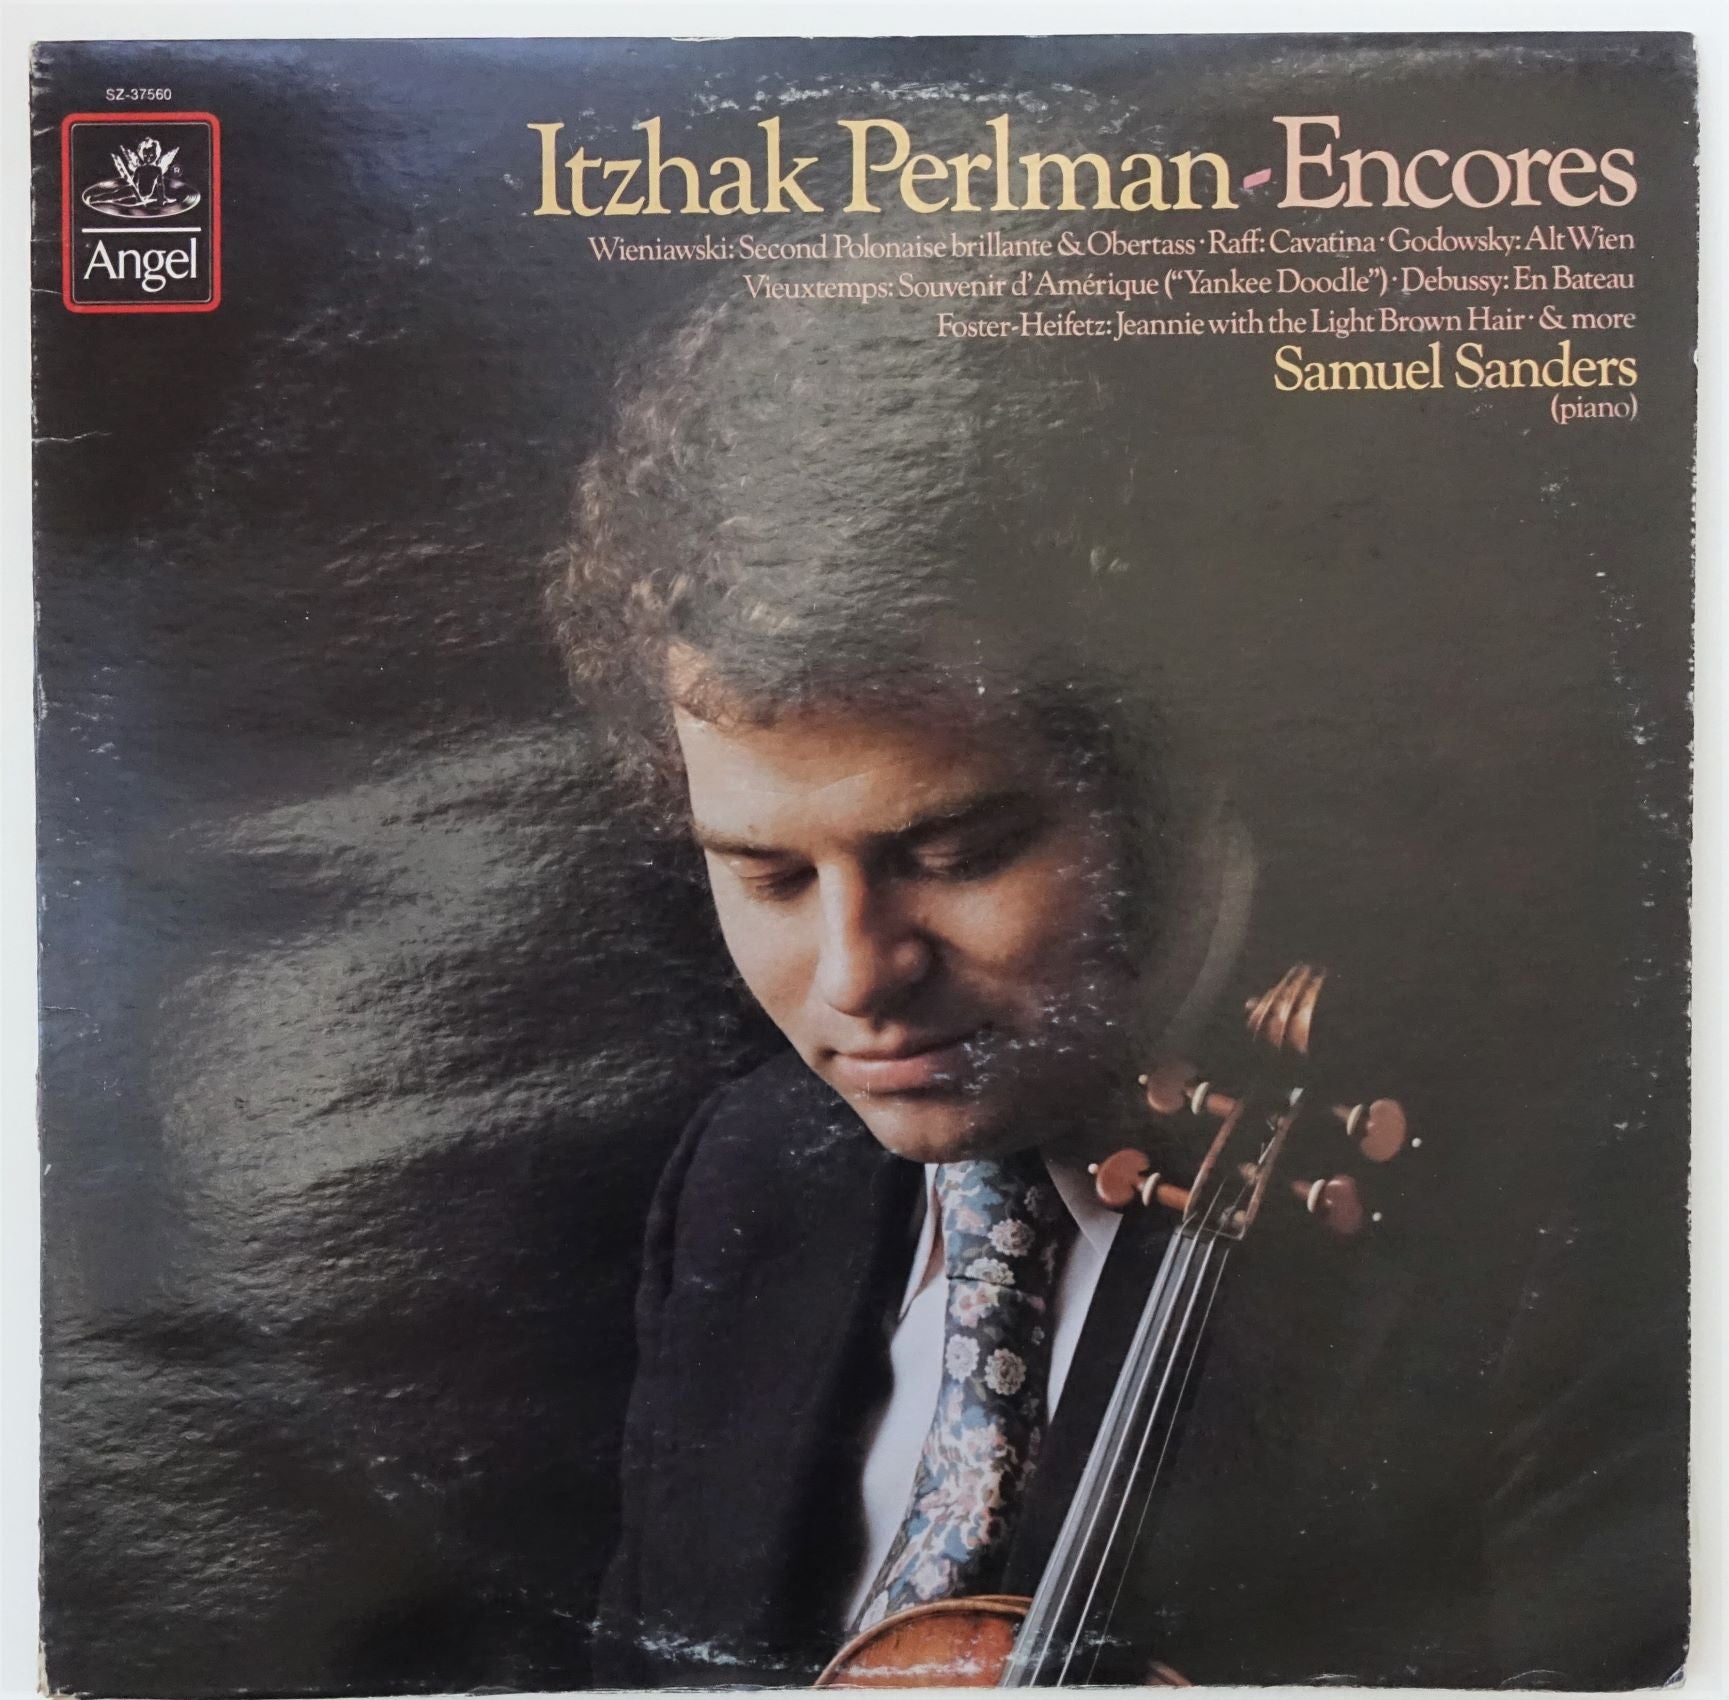 ANG015: Itzhak Perlman-Encores